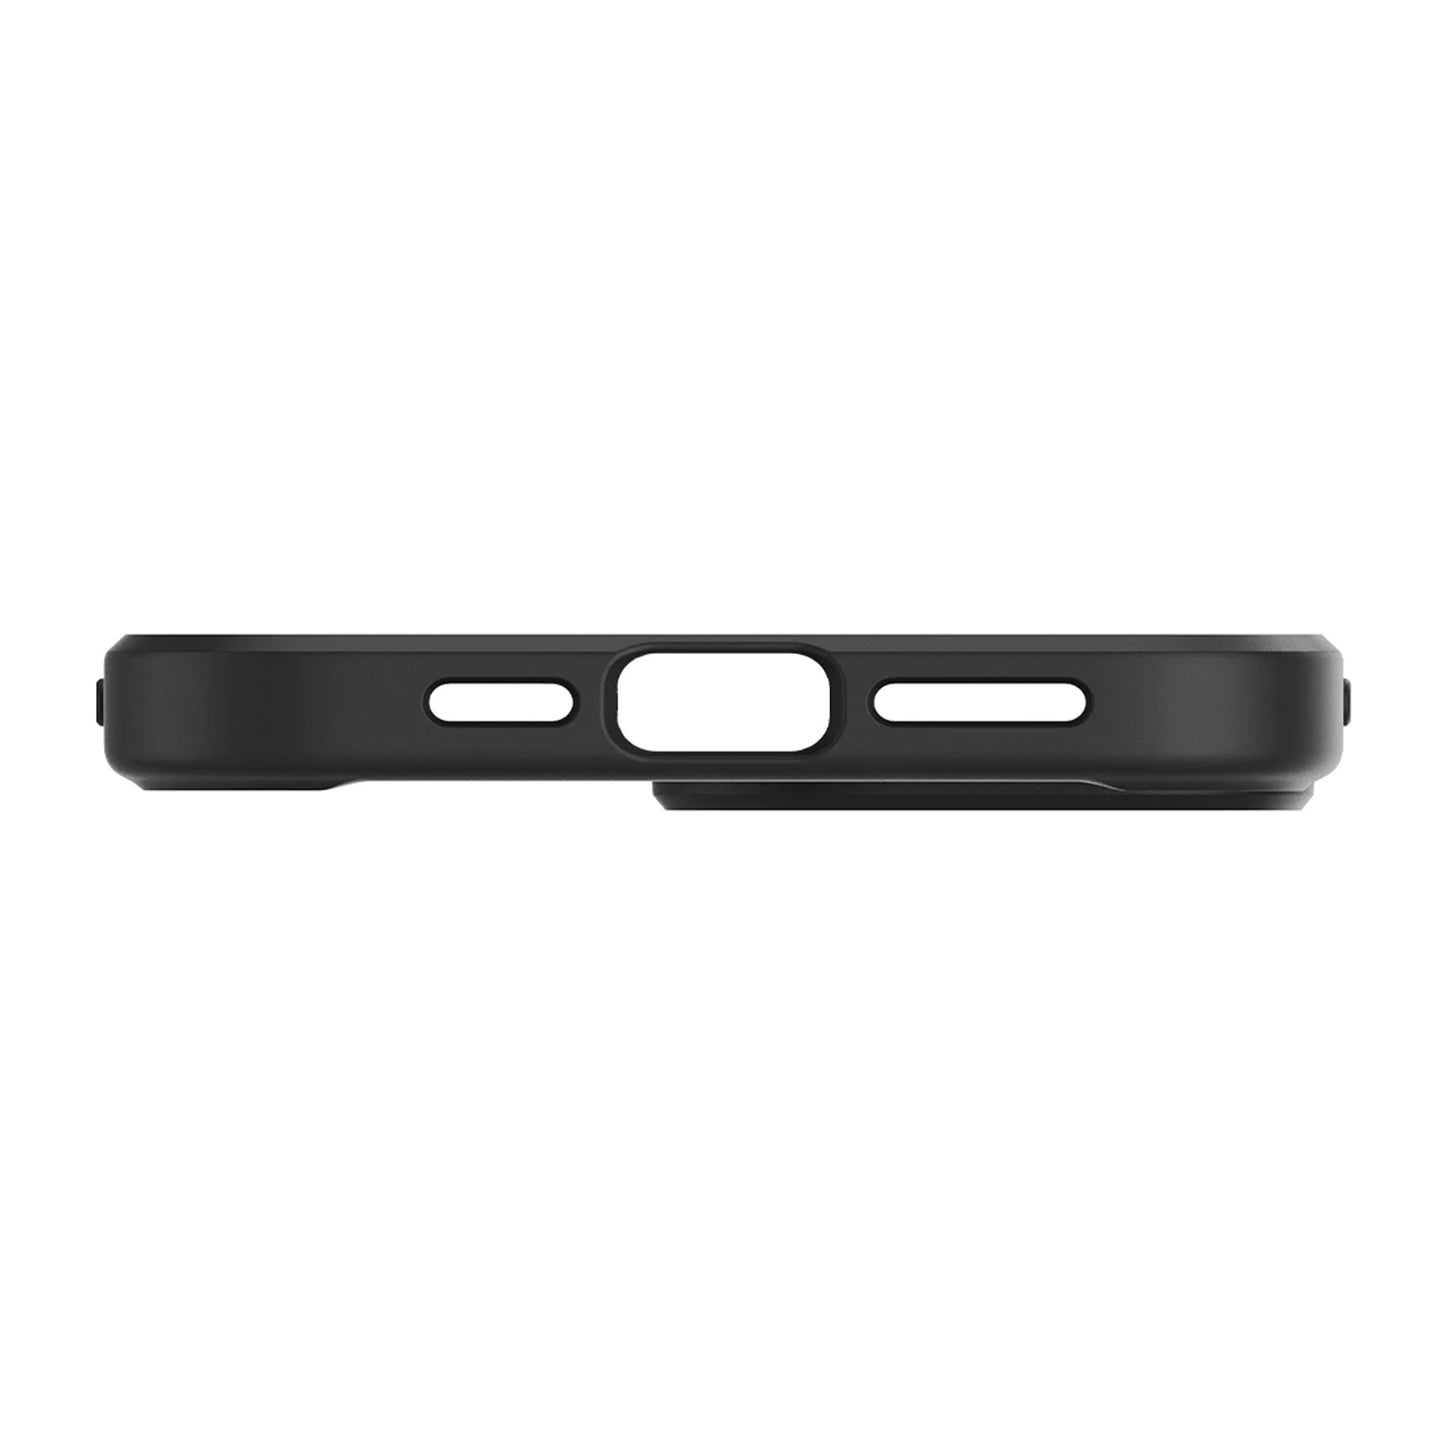 Spigen Ultra Hybrid for iPhone 13 Pro Max 6.7" 5G - Matte Black (Barcode: 8809756649523 )